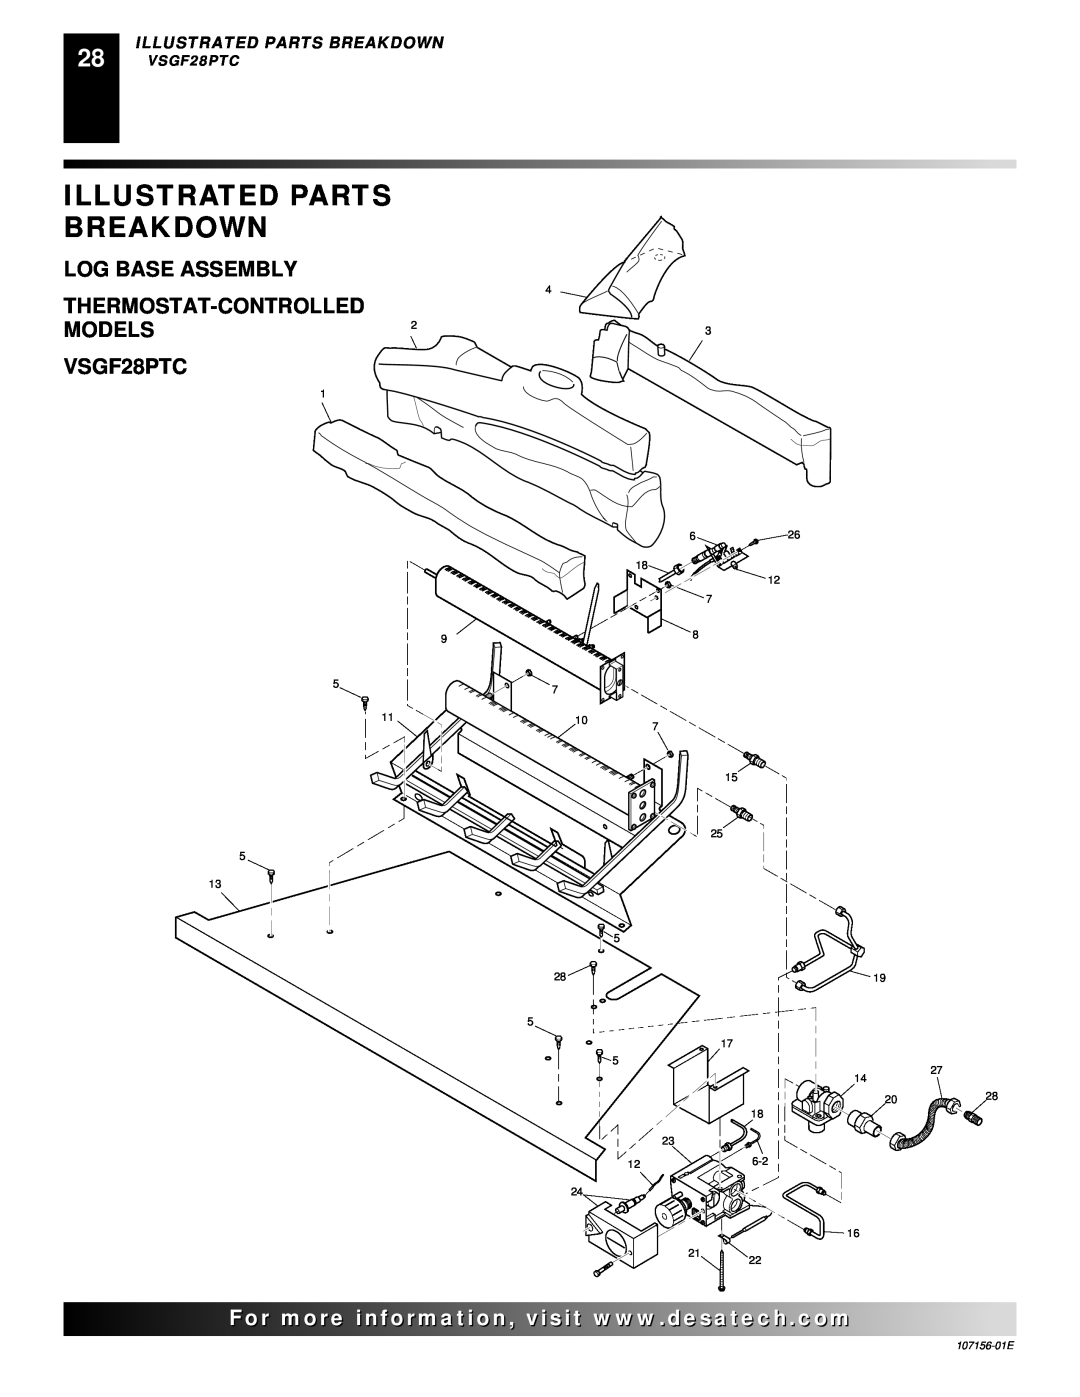 Vanguard Heating 107156-01E.pdf LOG BASE ASSEMBLY THERMOSTAT-CONTROLLED MODELS2, Illustrated Parts Breakdown, VSGF28PTC 